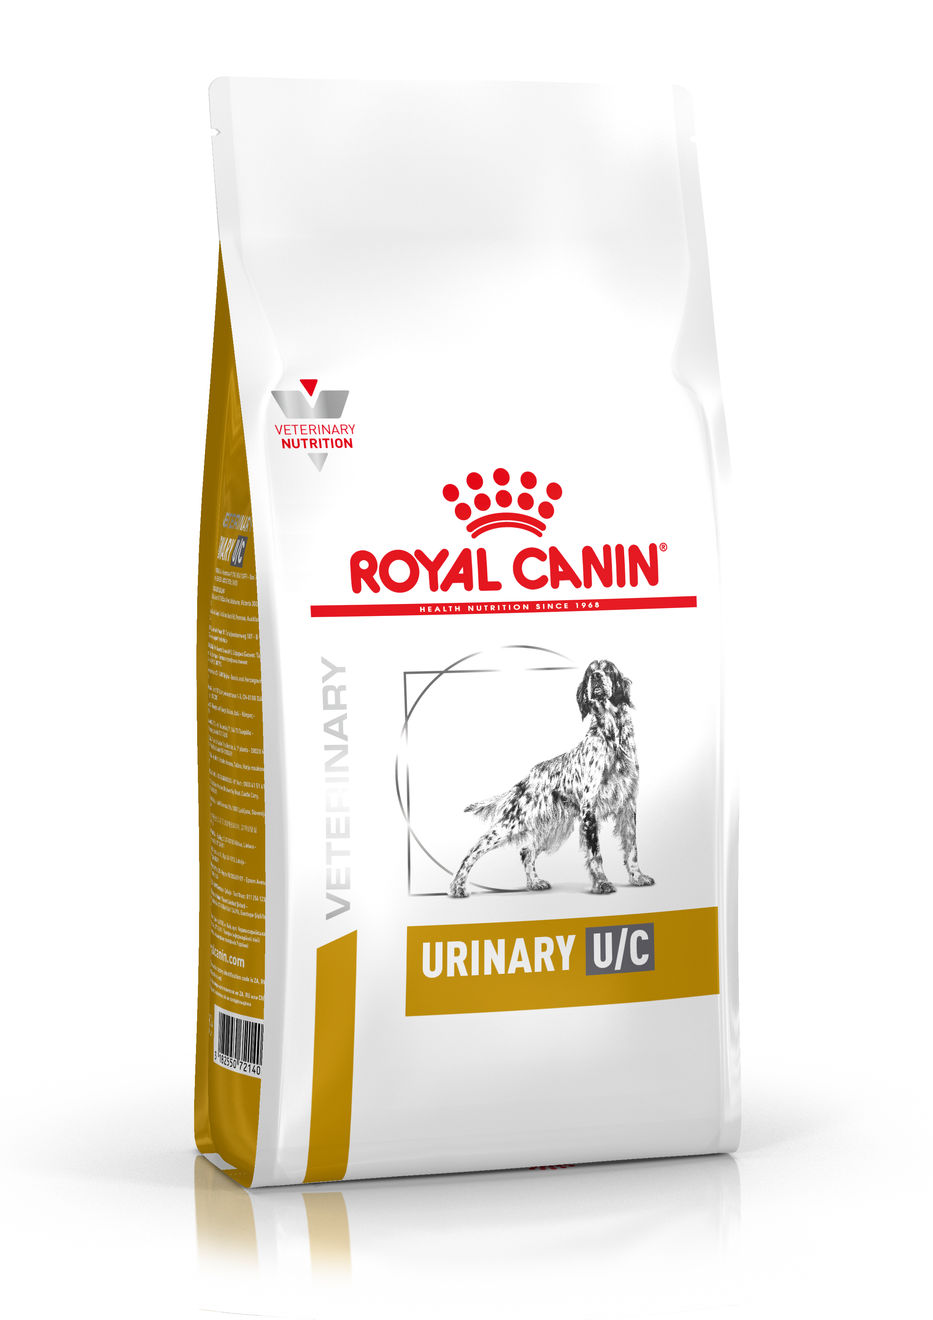 Royal Canin U/C low purine 2x 7.5 kg